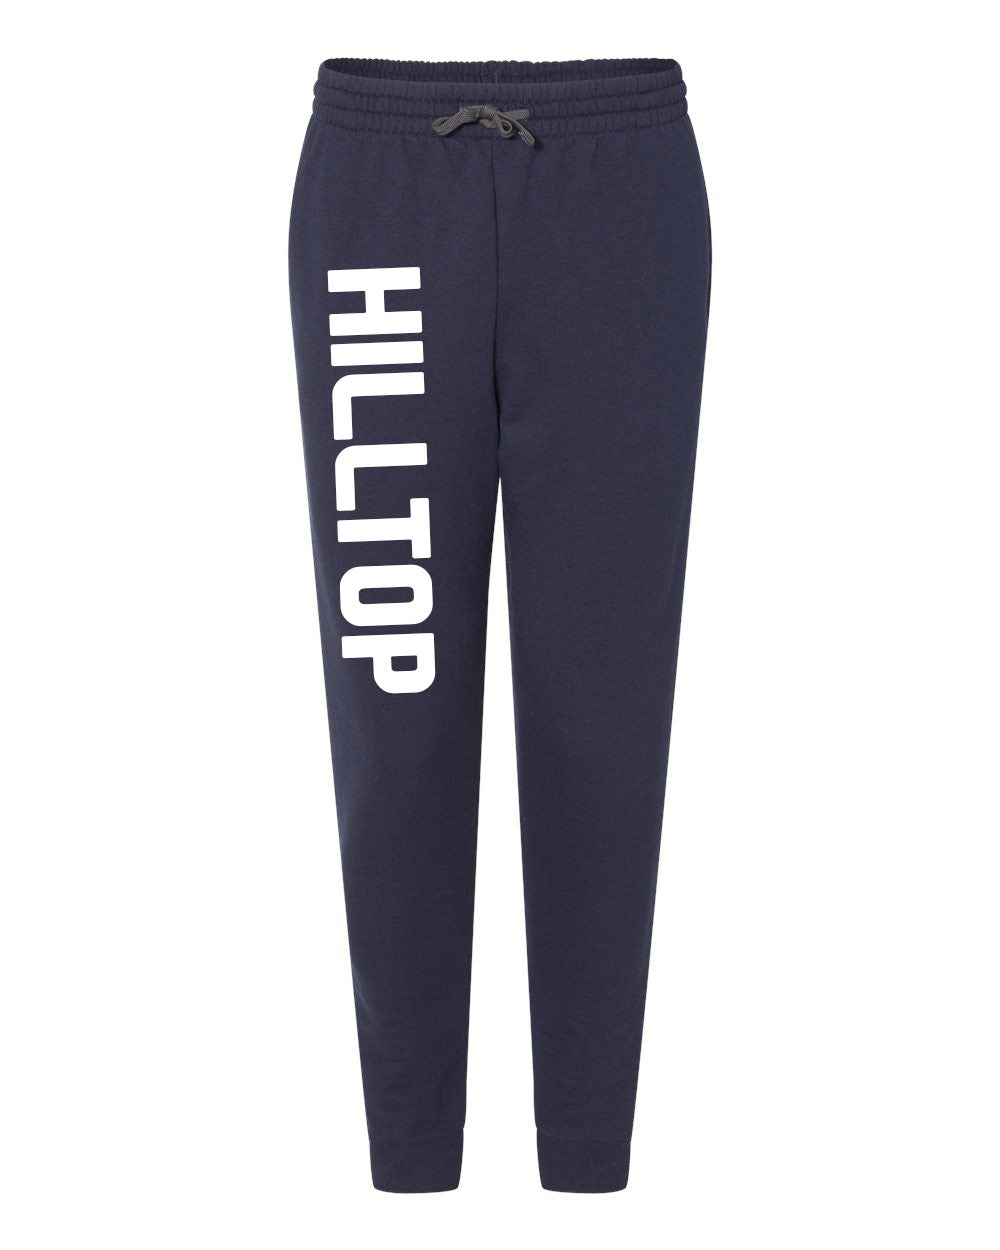 Hilltop Country Day School design 44 Sweatpants